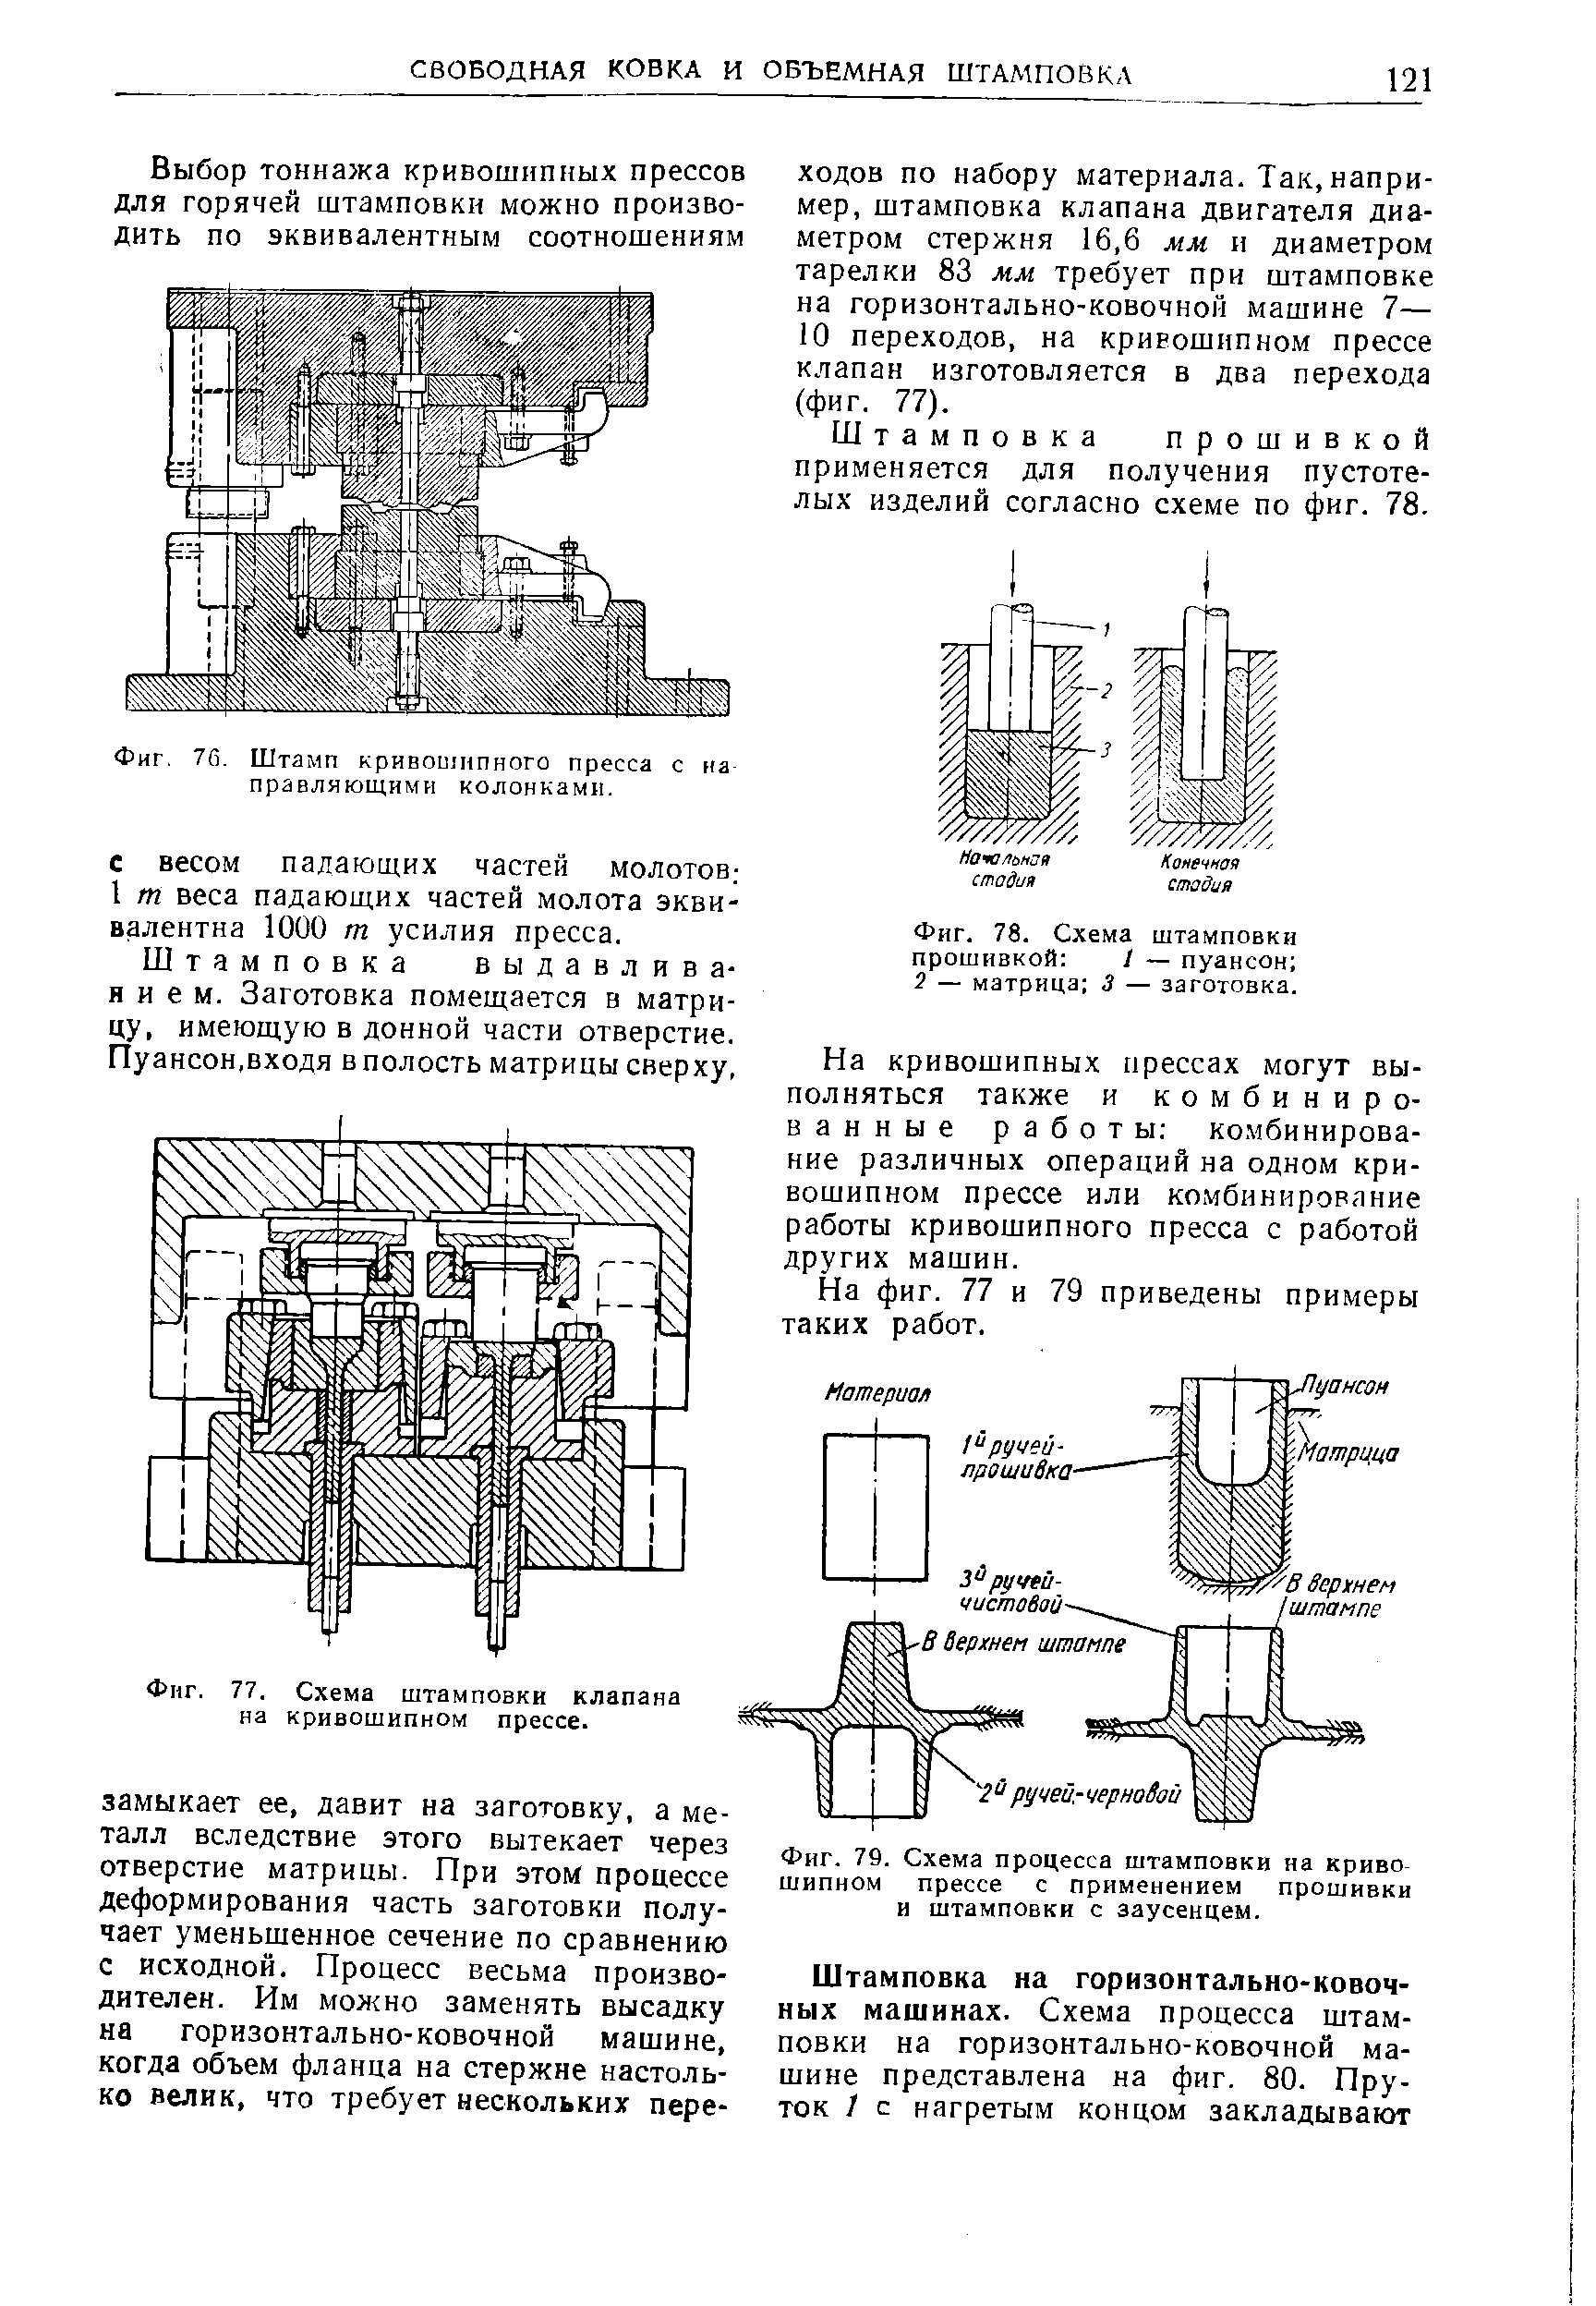 Фиг. 78. Схема штамповки прошивкой / — пуансон 2 — матрица 3 — заготовка.
